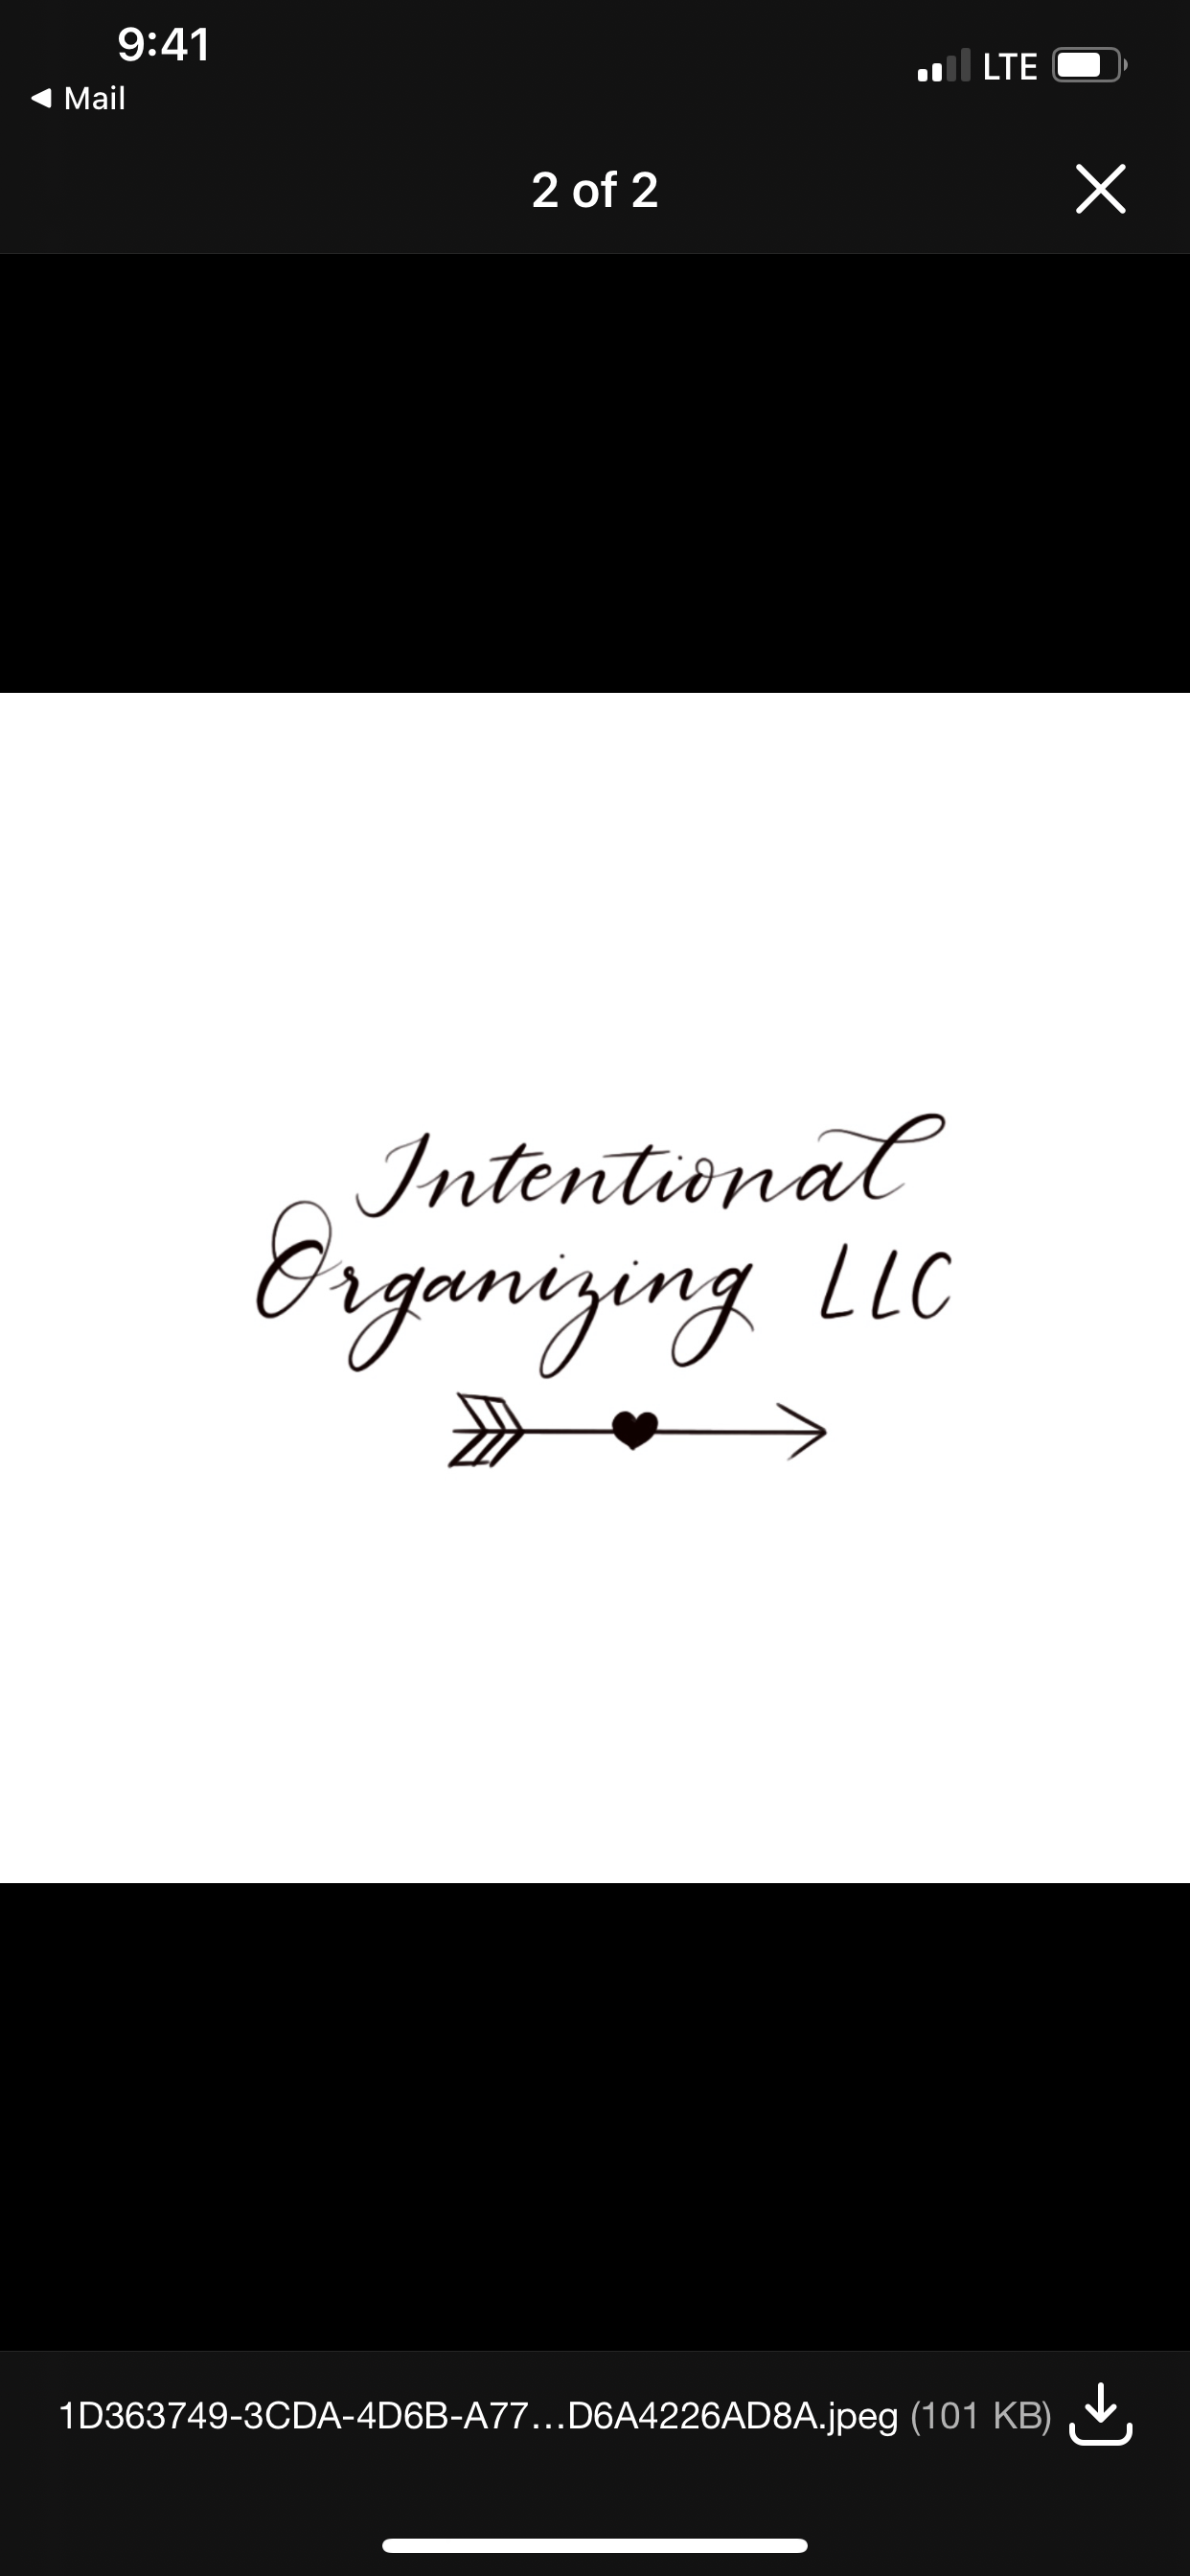 Intentional Organizing, LLC Logo